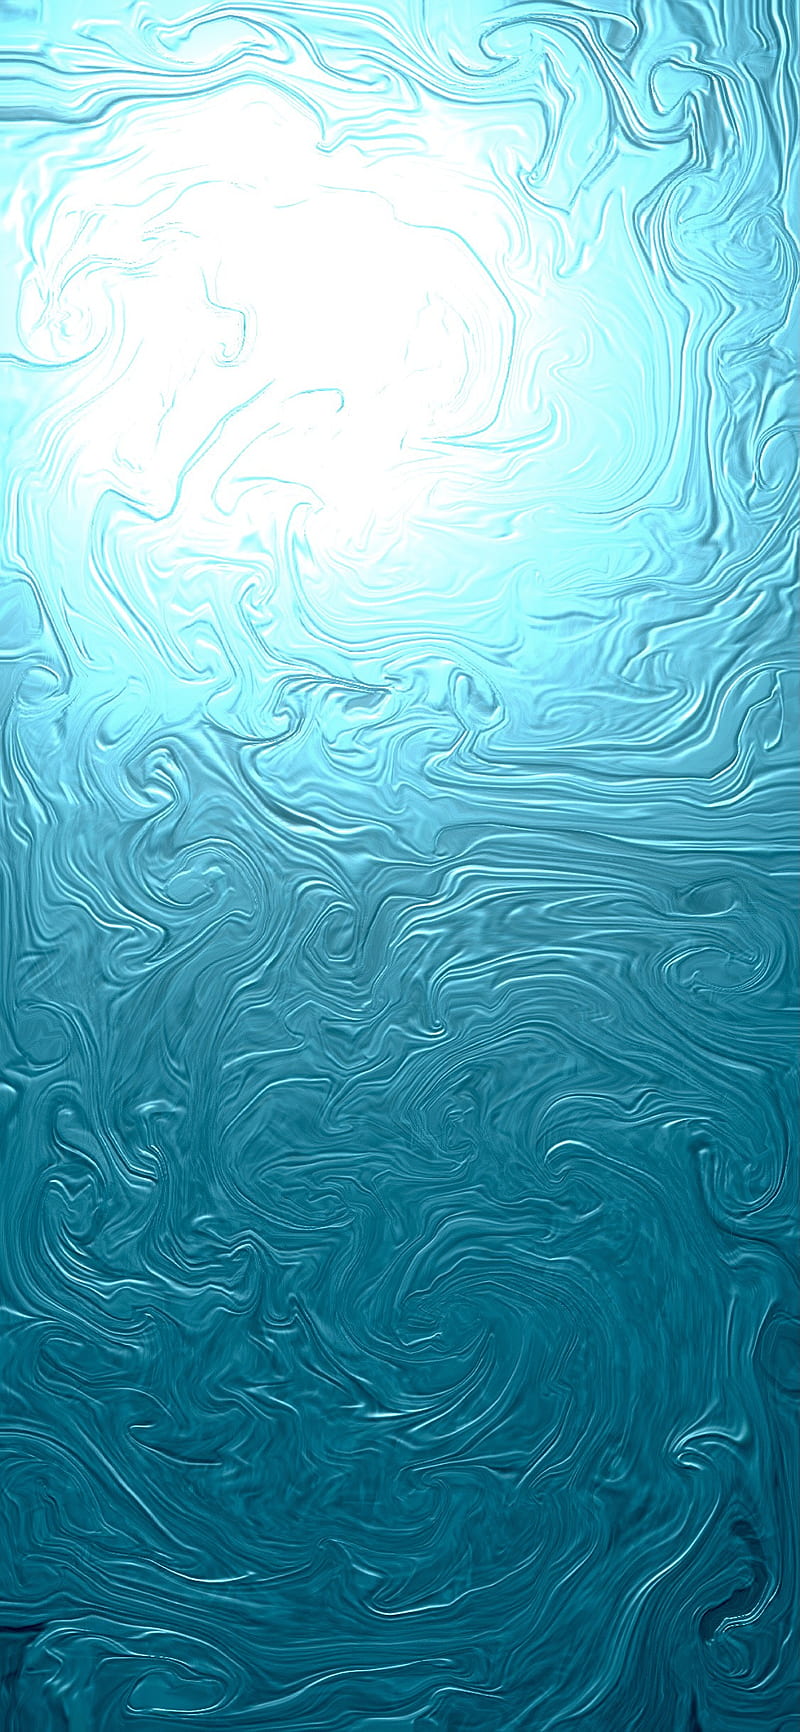 267243 Turquoise Green Teal Aqua Blue vivo V20 wallpaper 1080p  1080x2400  Rare Gallery HD Wallpapers